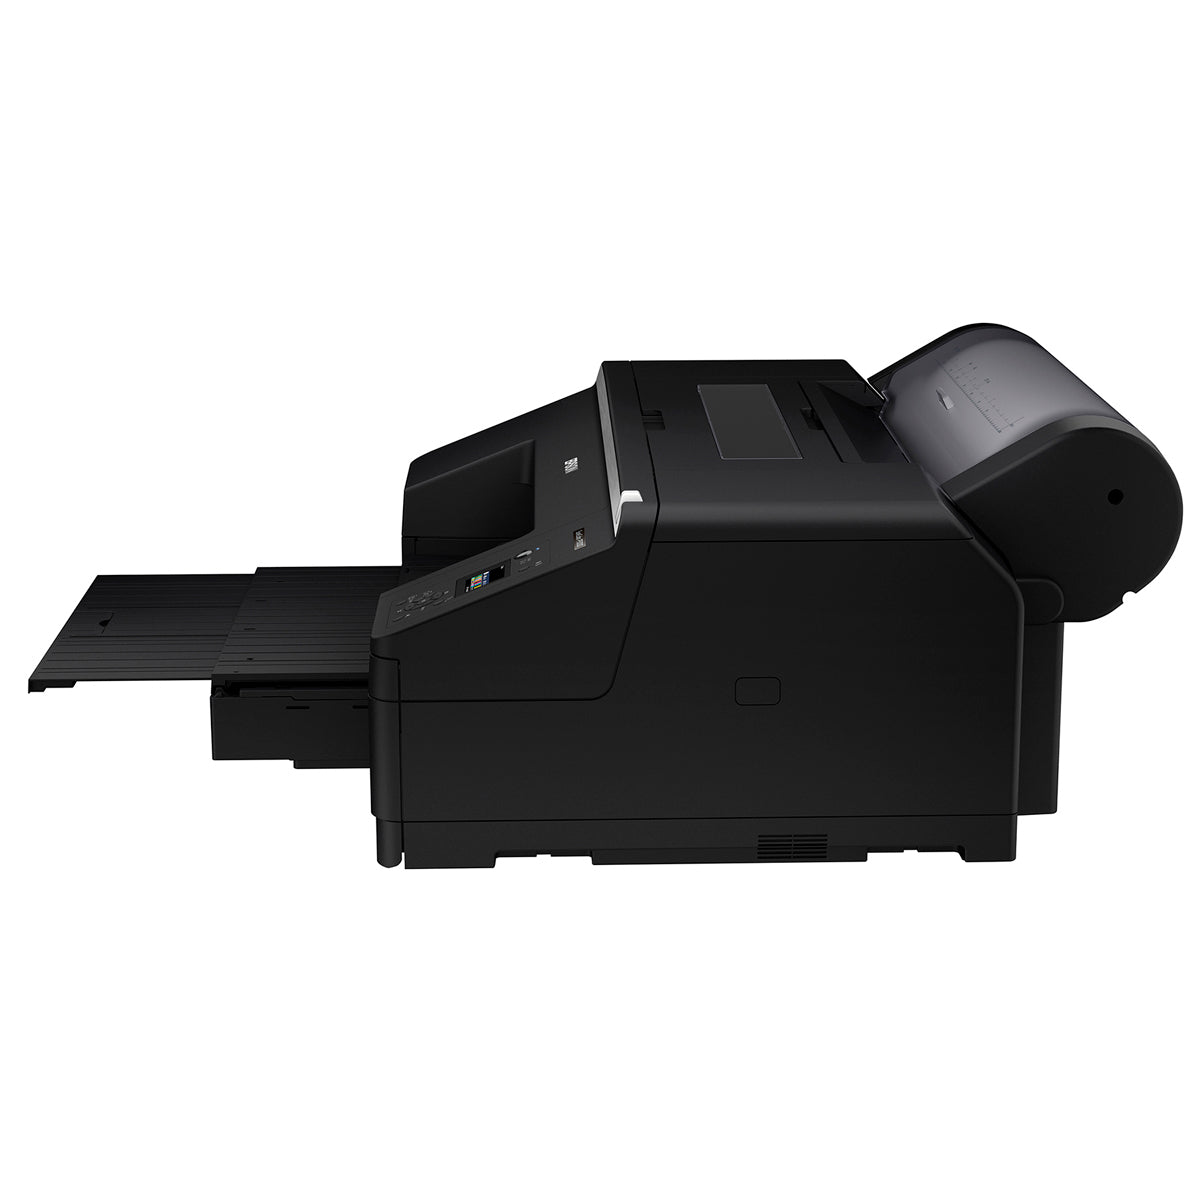 Epson SureColor P5000 Commercial Edition Printer